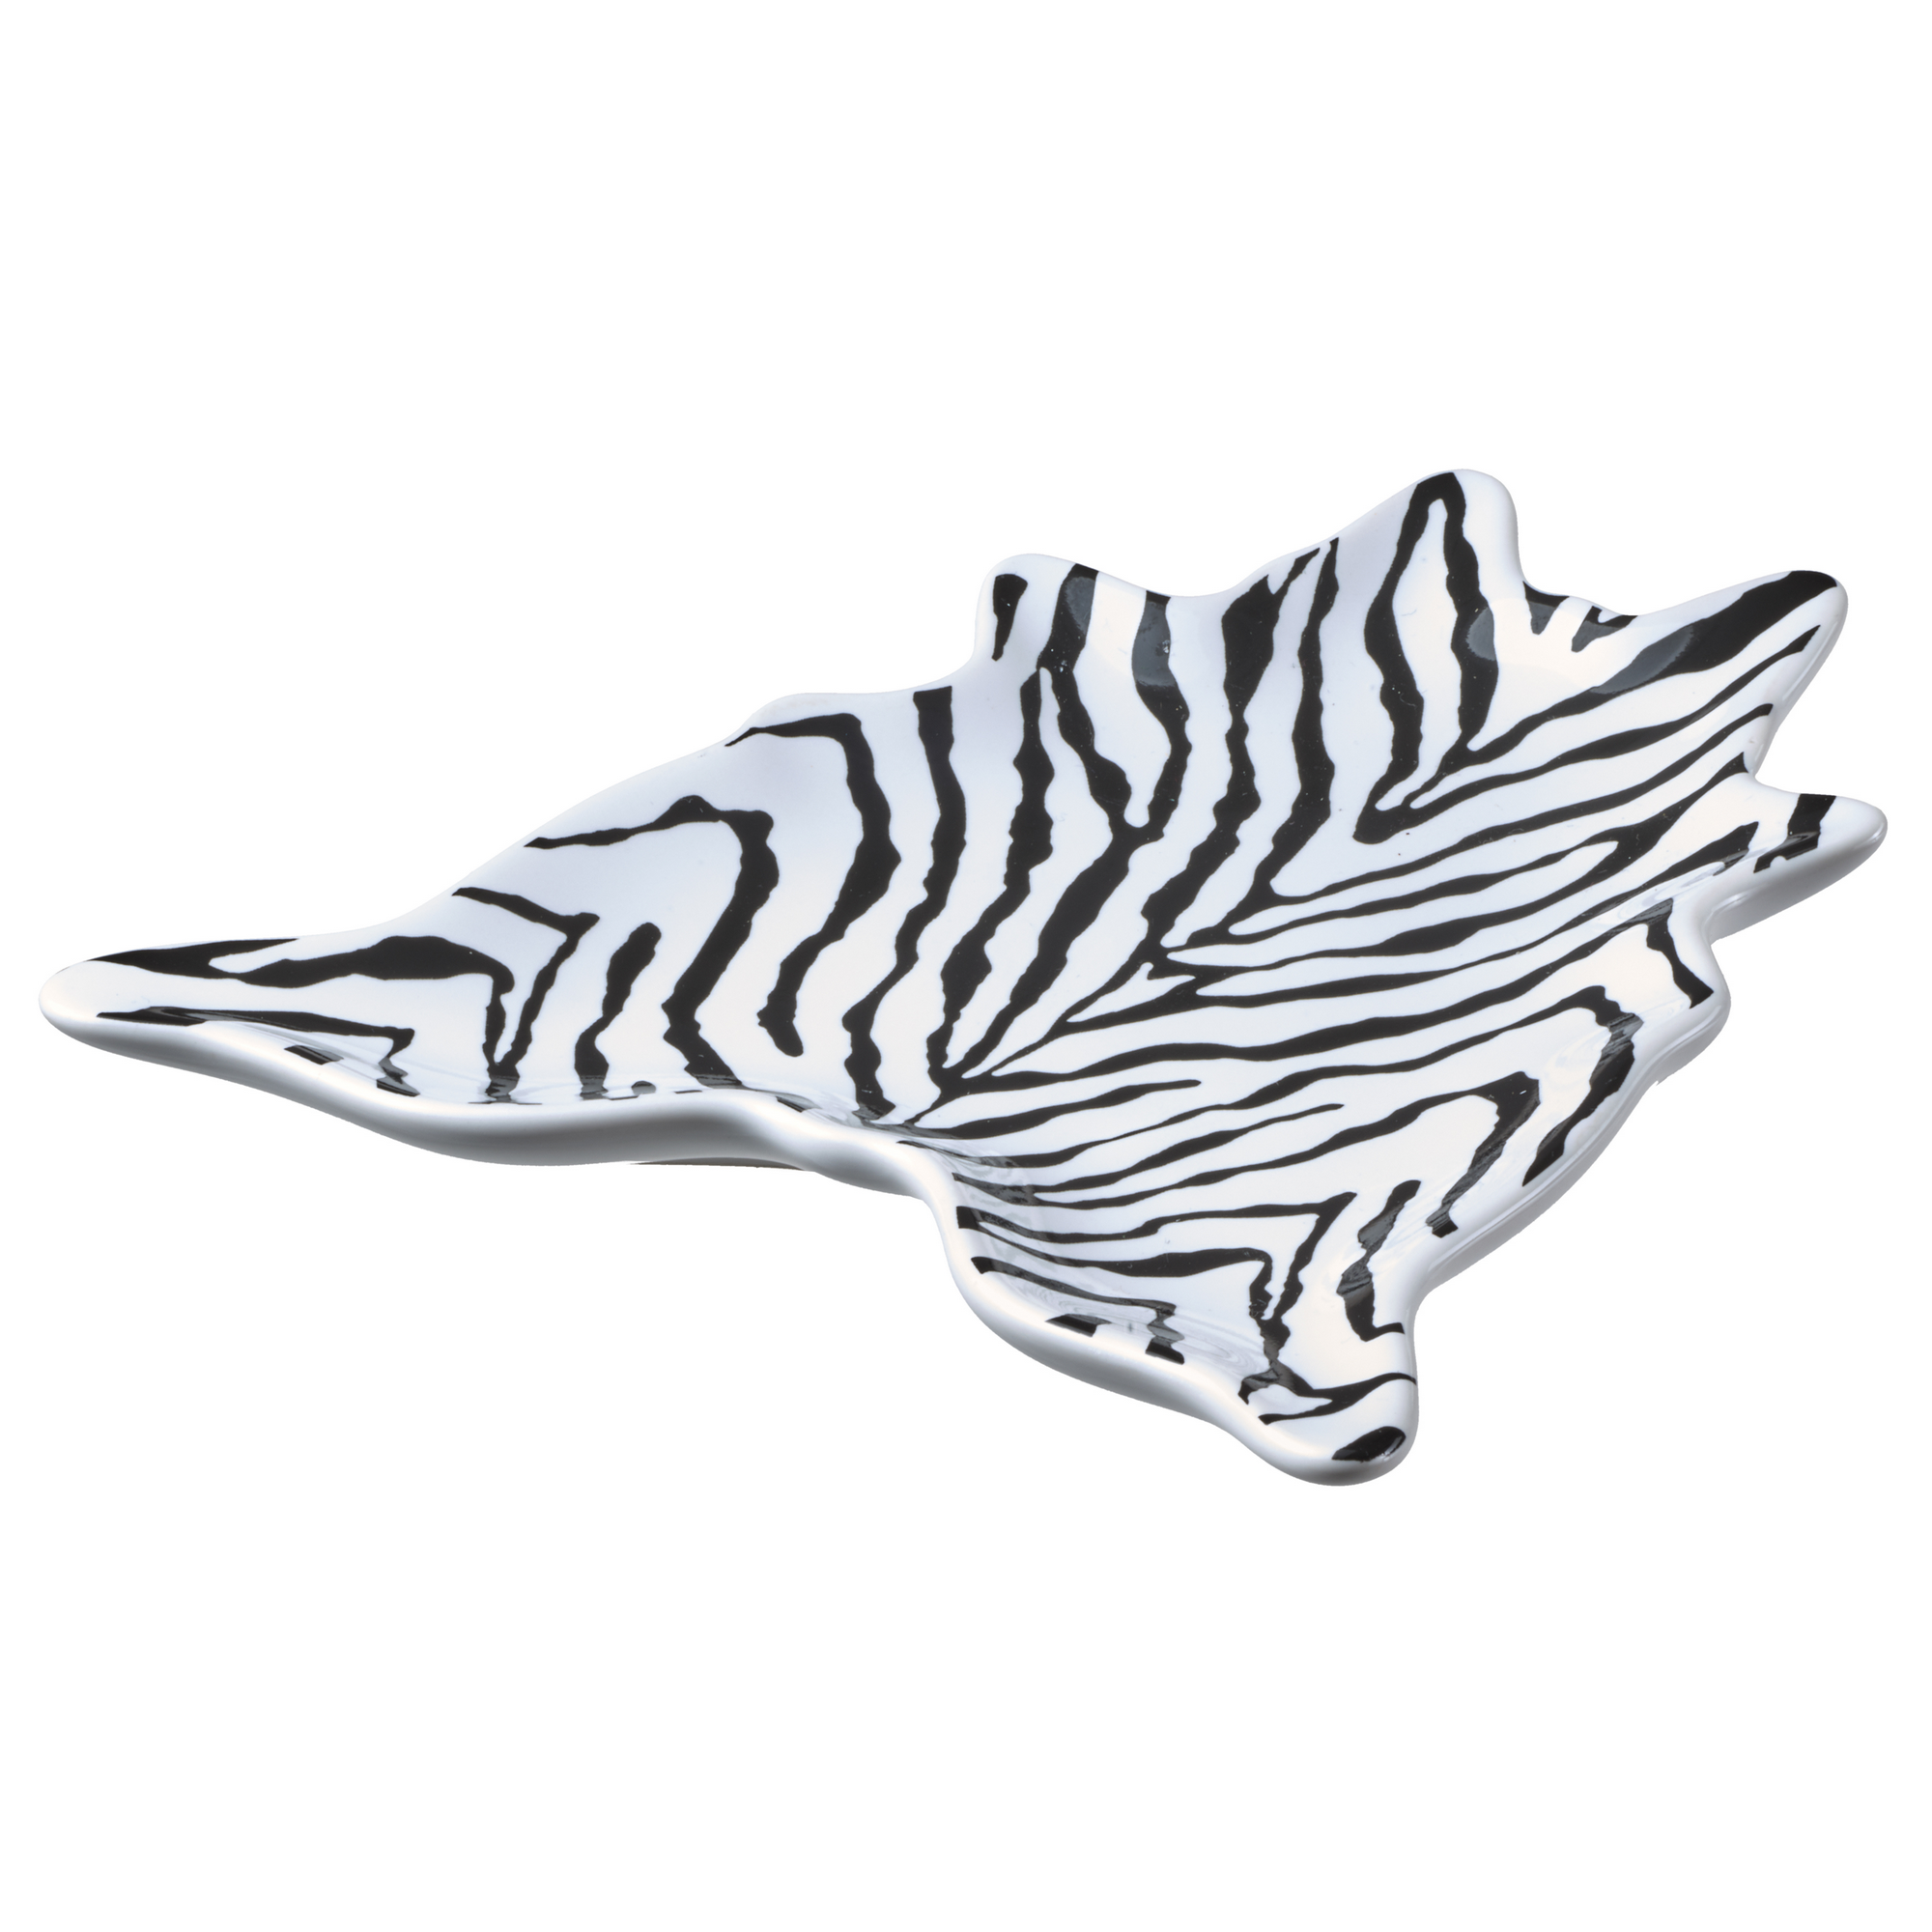 Kammschale 'Zebra' Steinzeug schwarz-weiß 11,3 x 13 x 1,5 cm + product picture